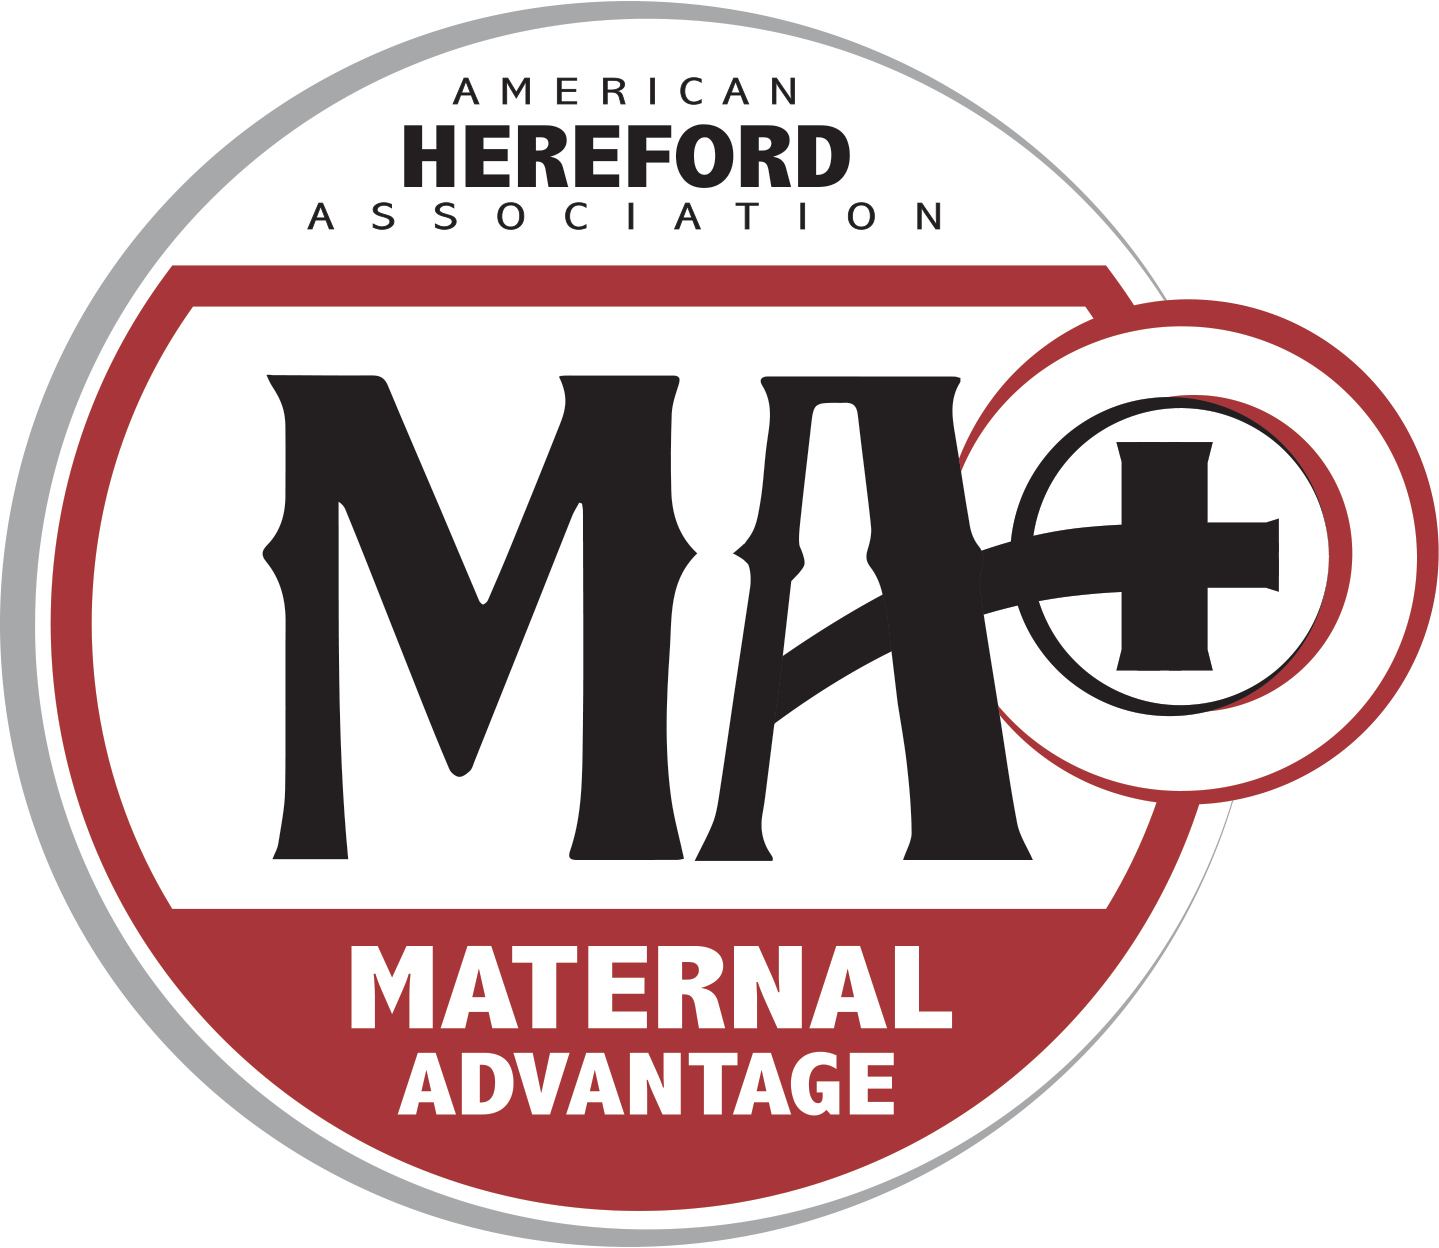 Hereford Logo - American Hereford | Art Library - American Hereford